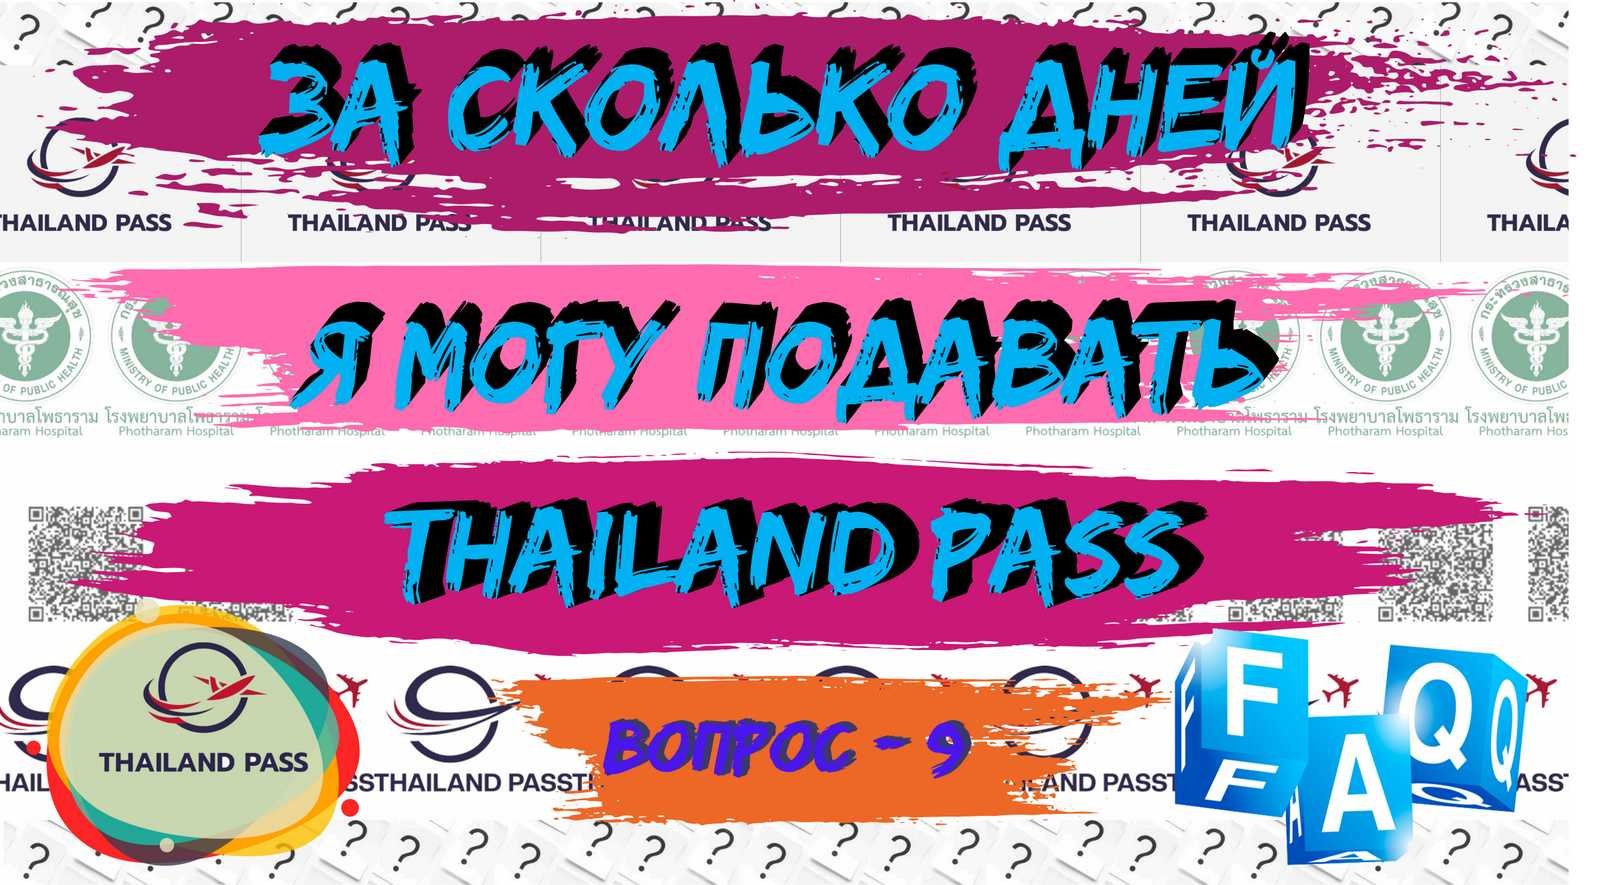 Thailand pass